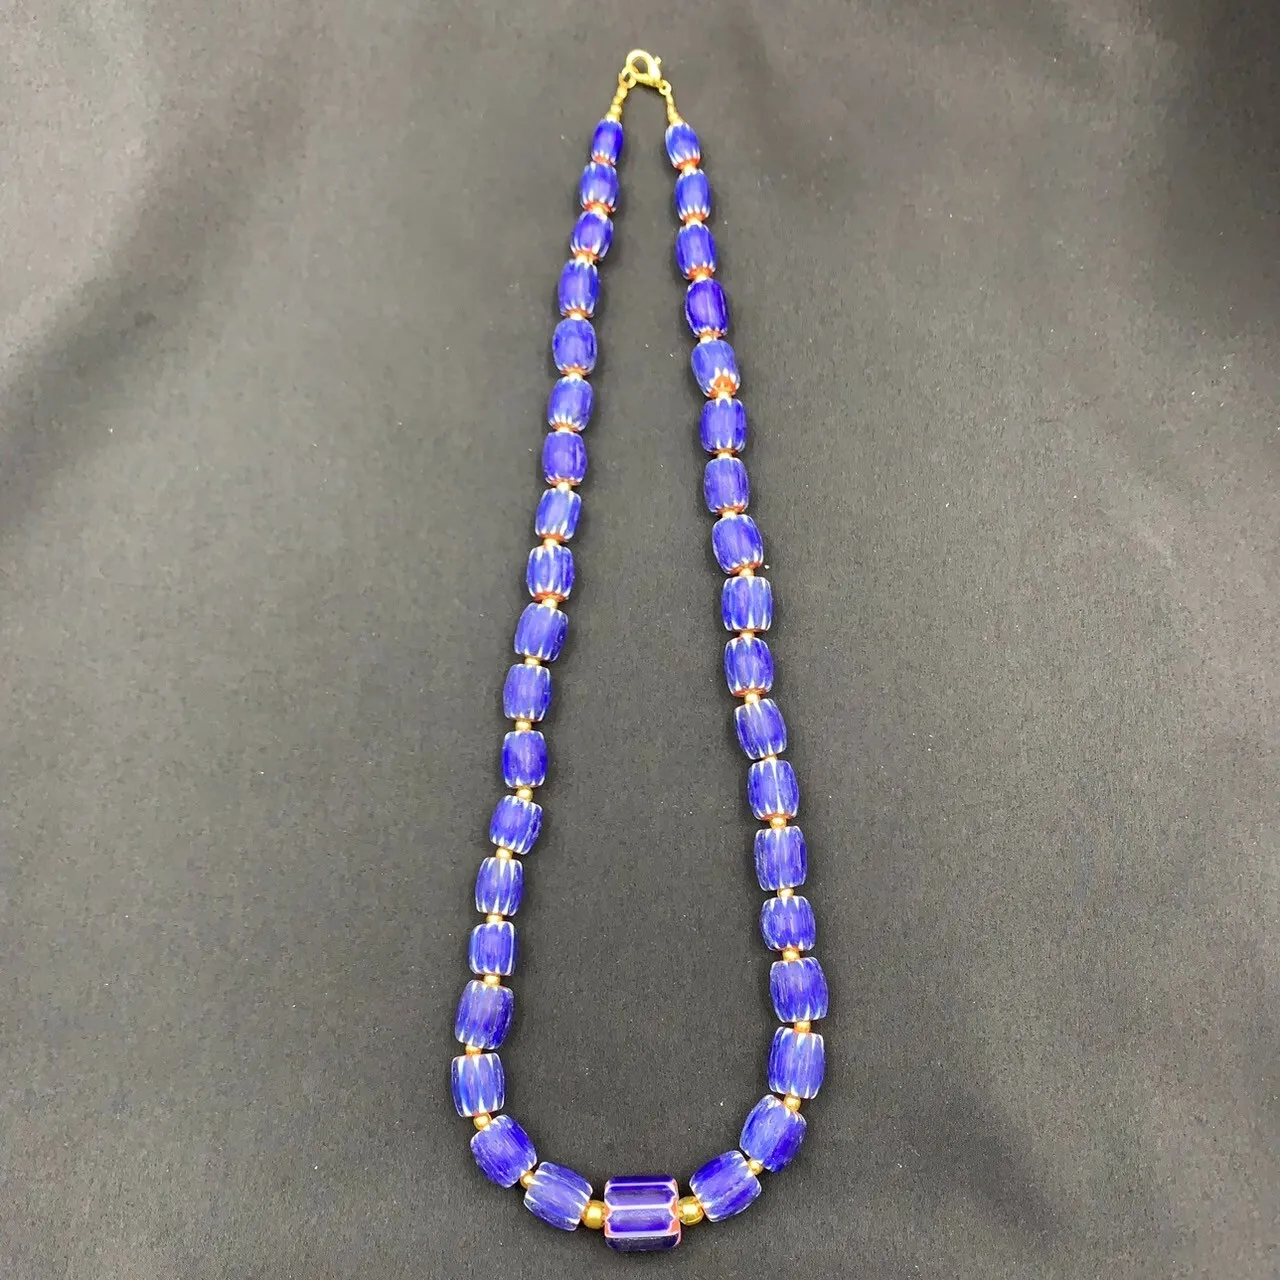 Venetian Vintage Chevron Trade Beads Necklace, African Chevron Trade Beads Mala, TeT-363 - Image 8 of 8